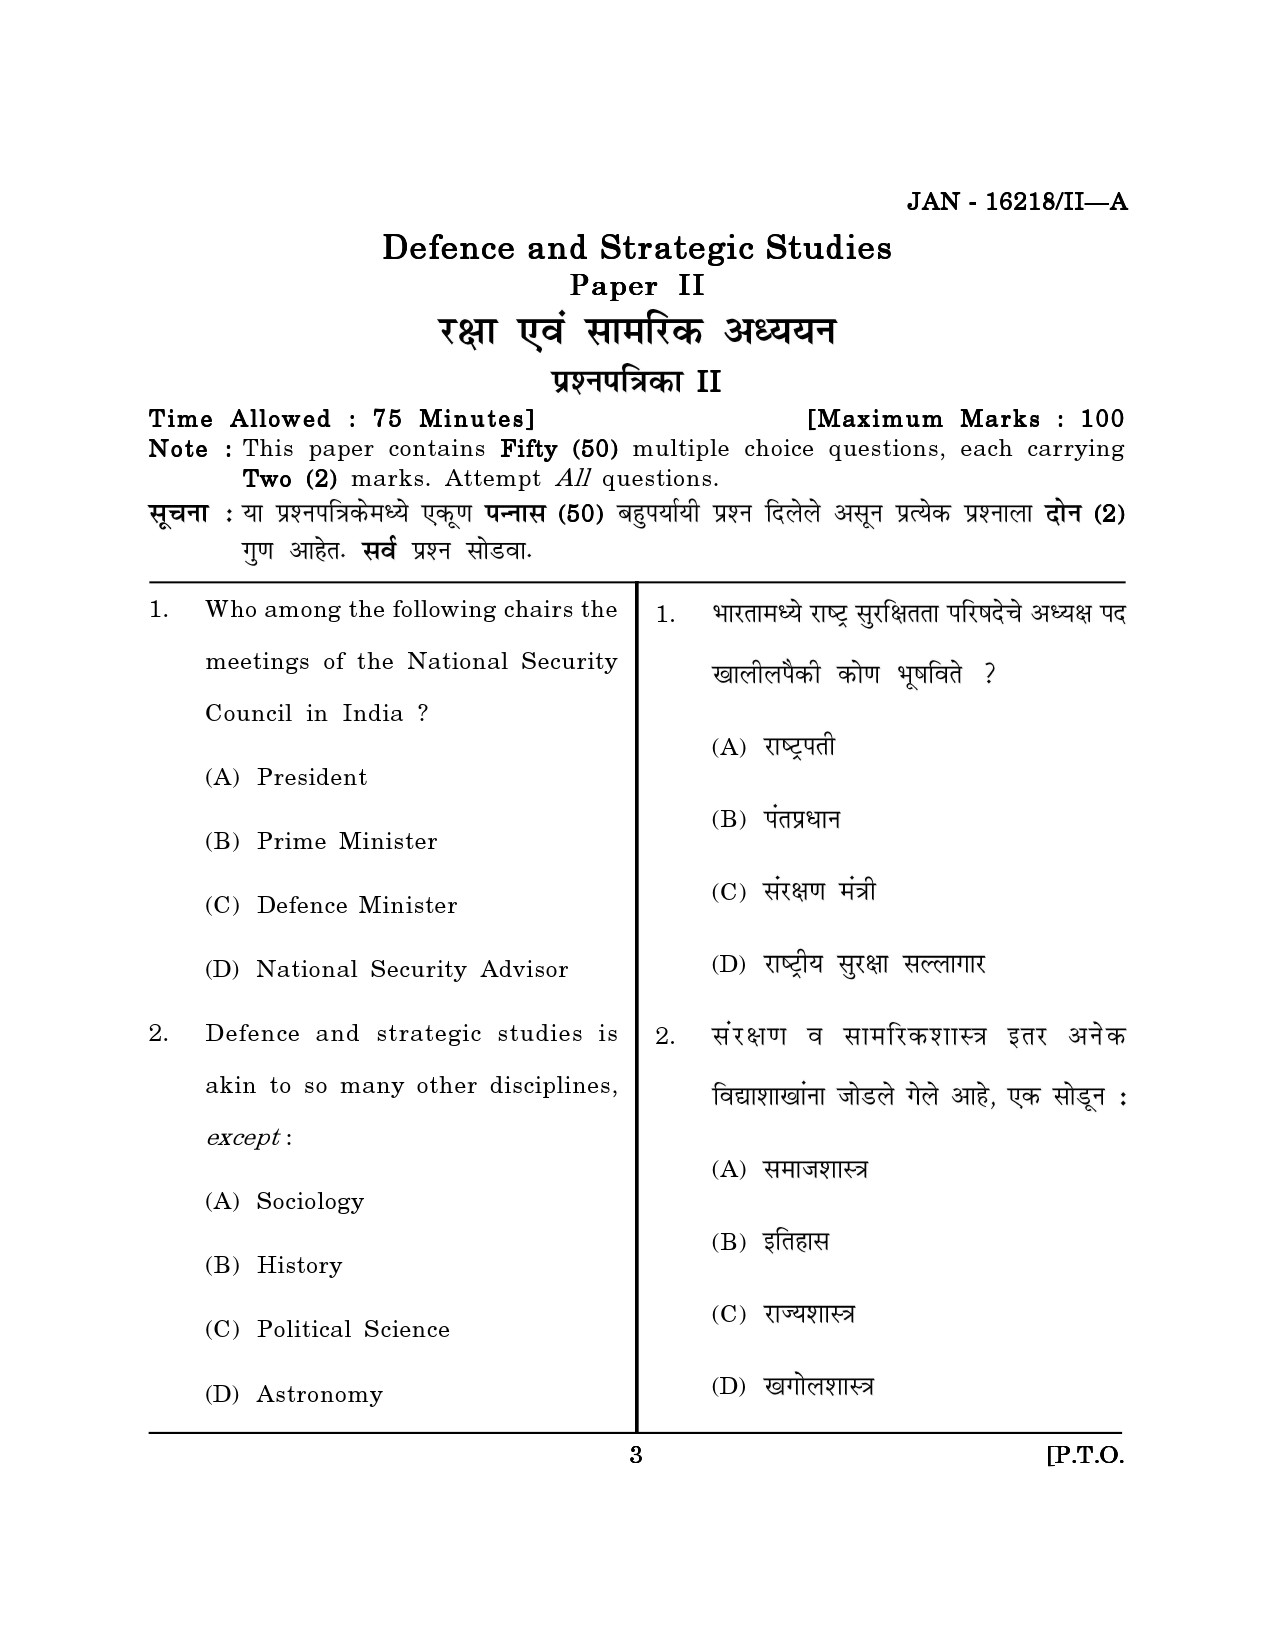 Maharashtra SET Defence and Strategic Studies Question Paper II January 2018 2